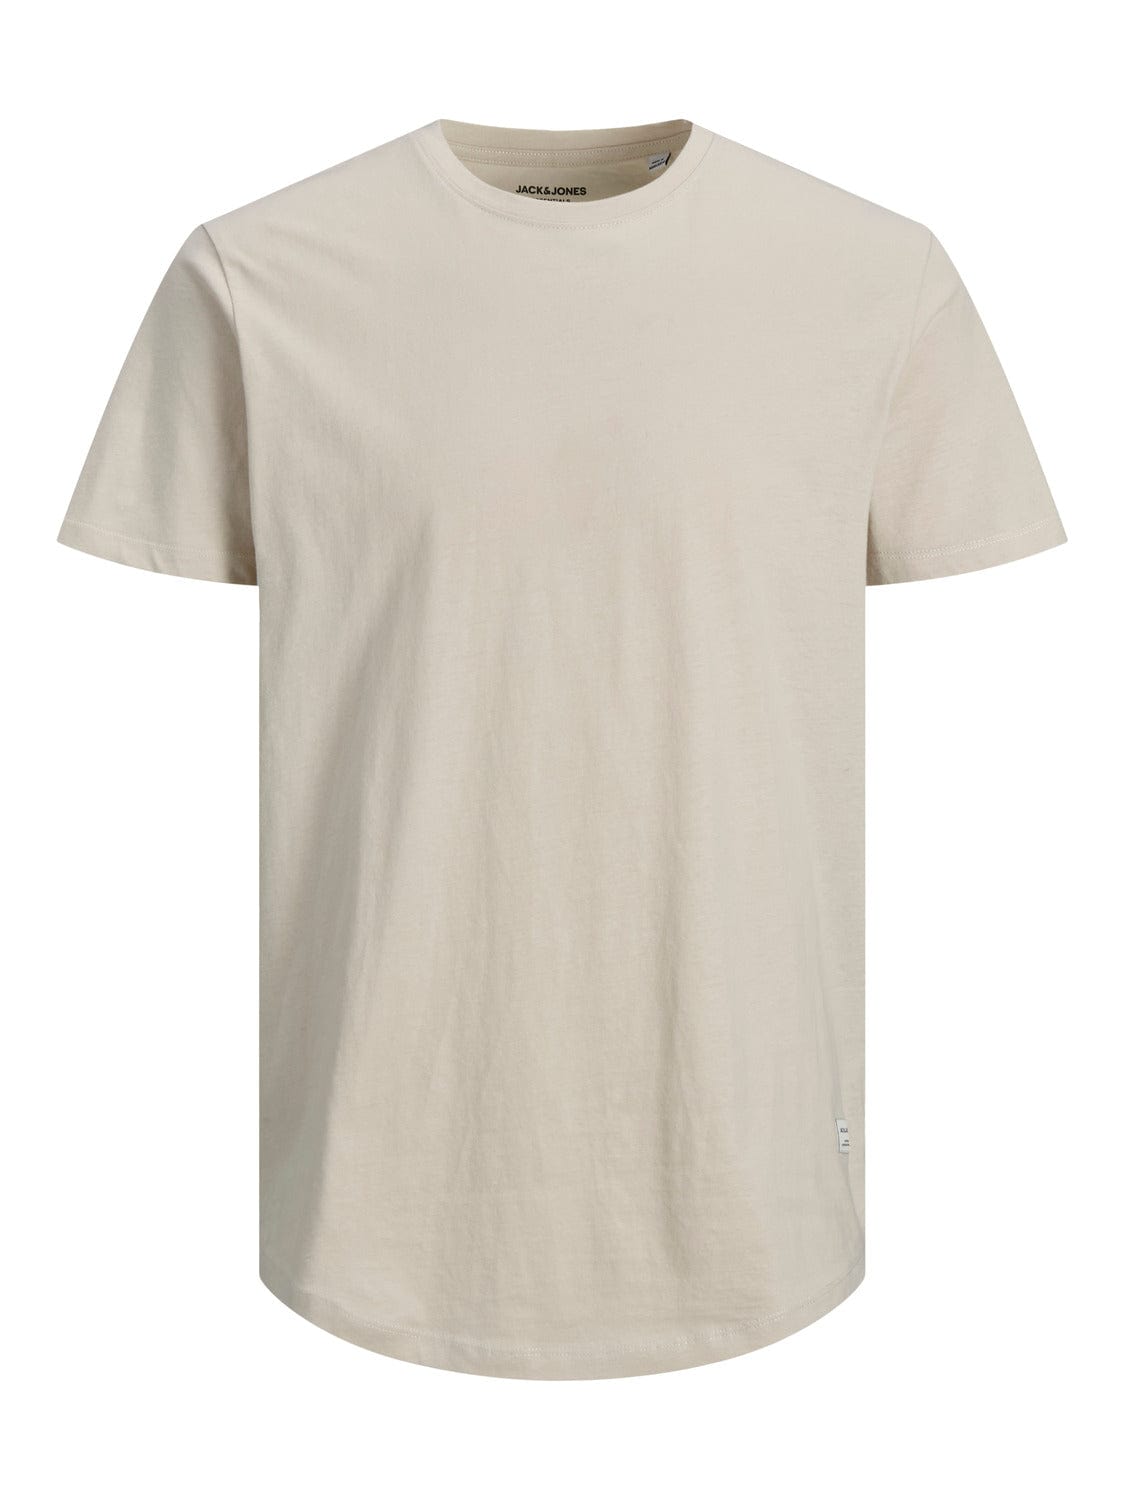 Camiseta hombre básica algodón beige Noa